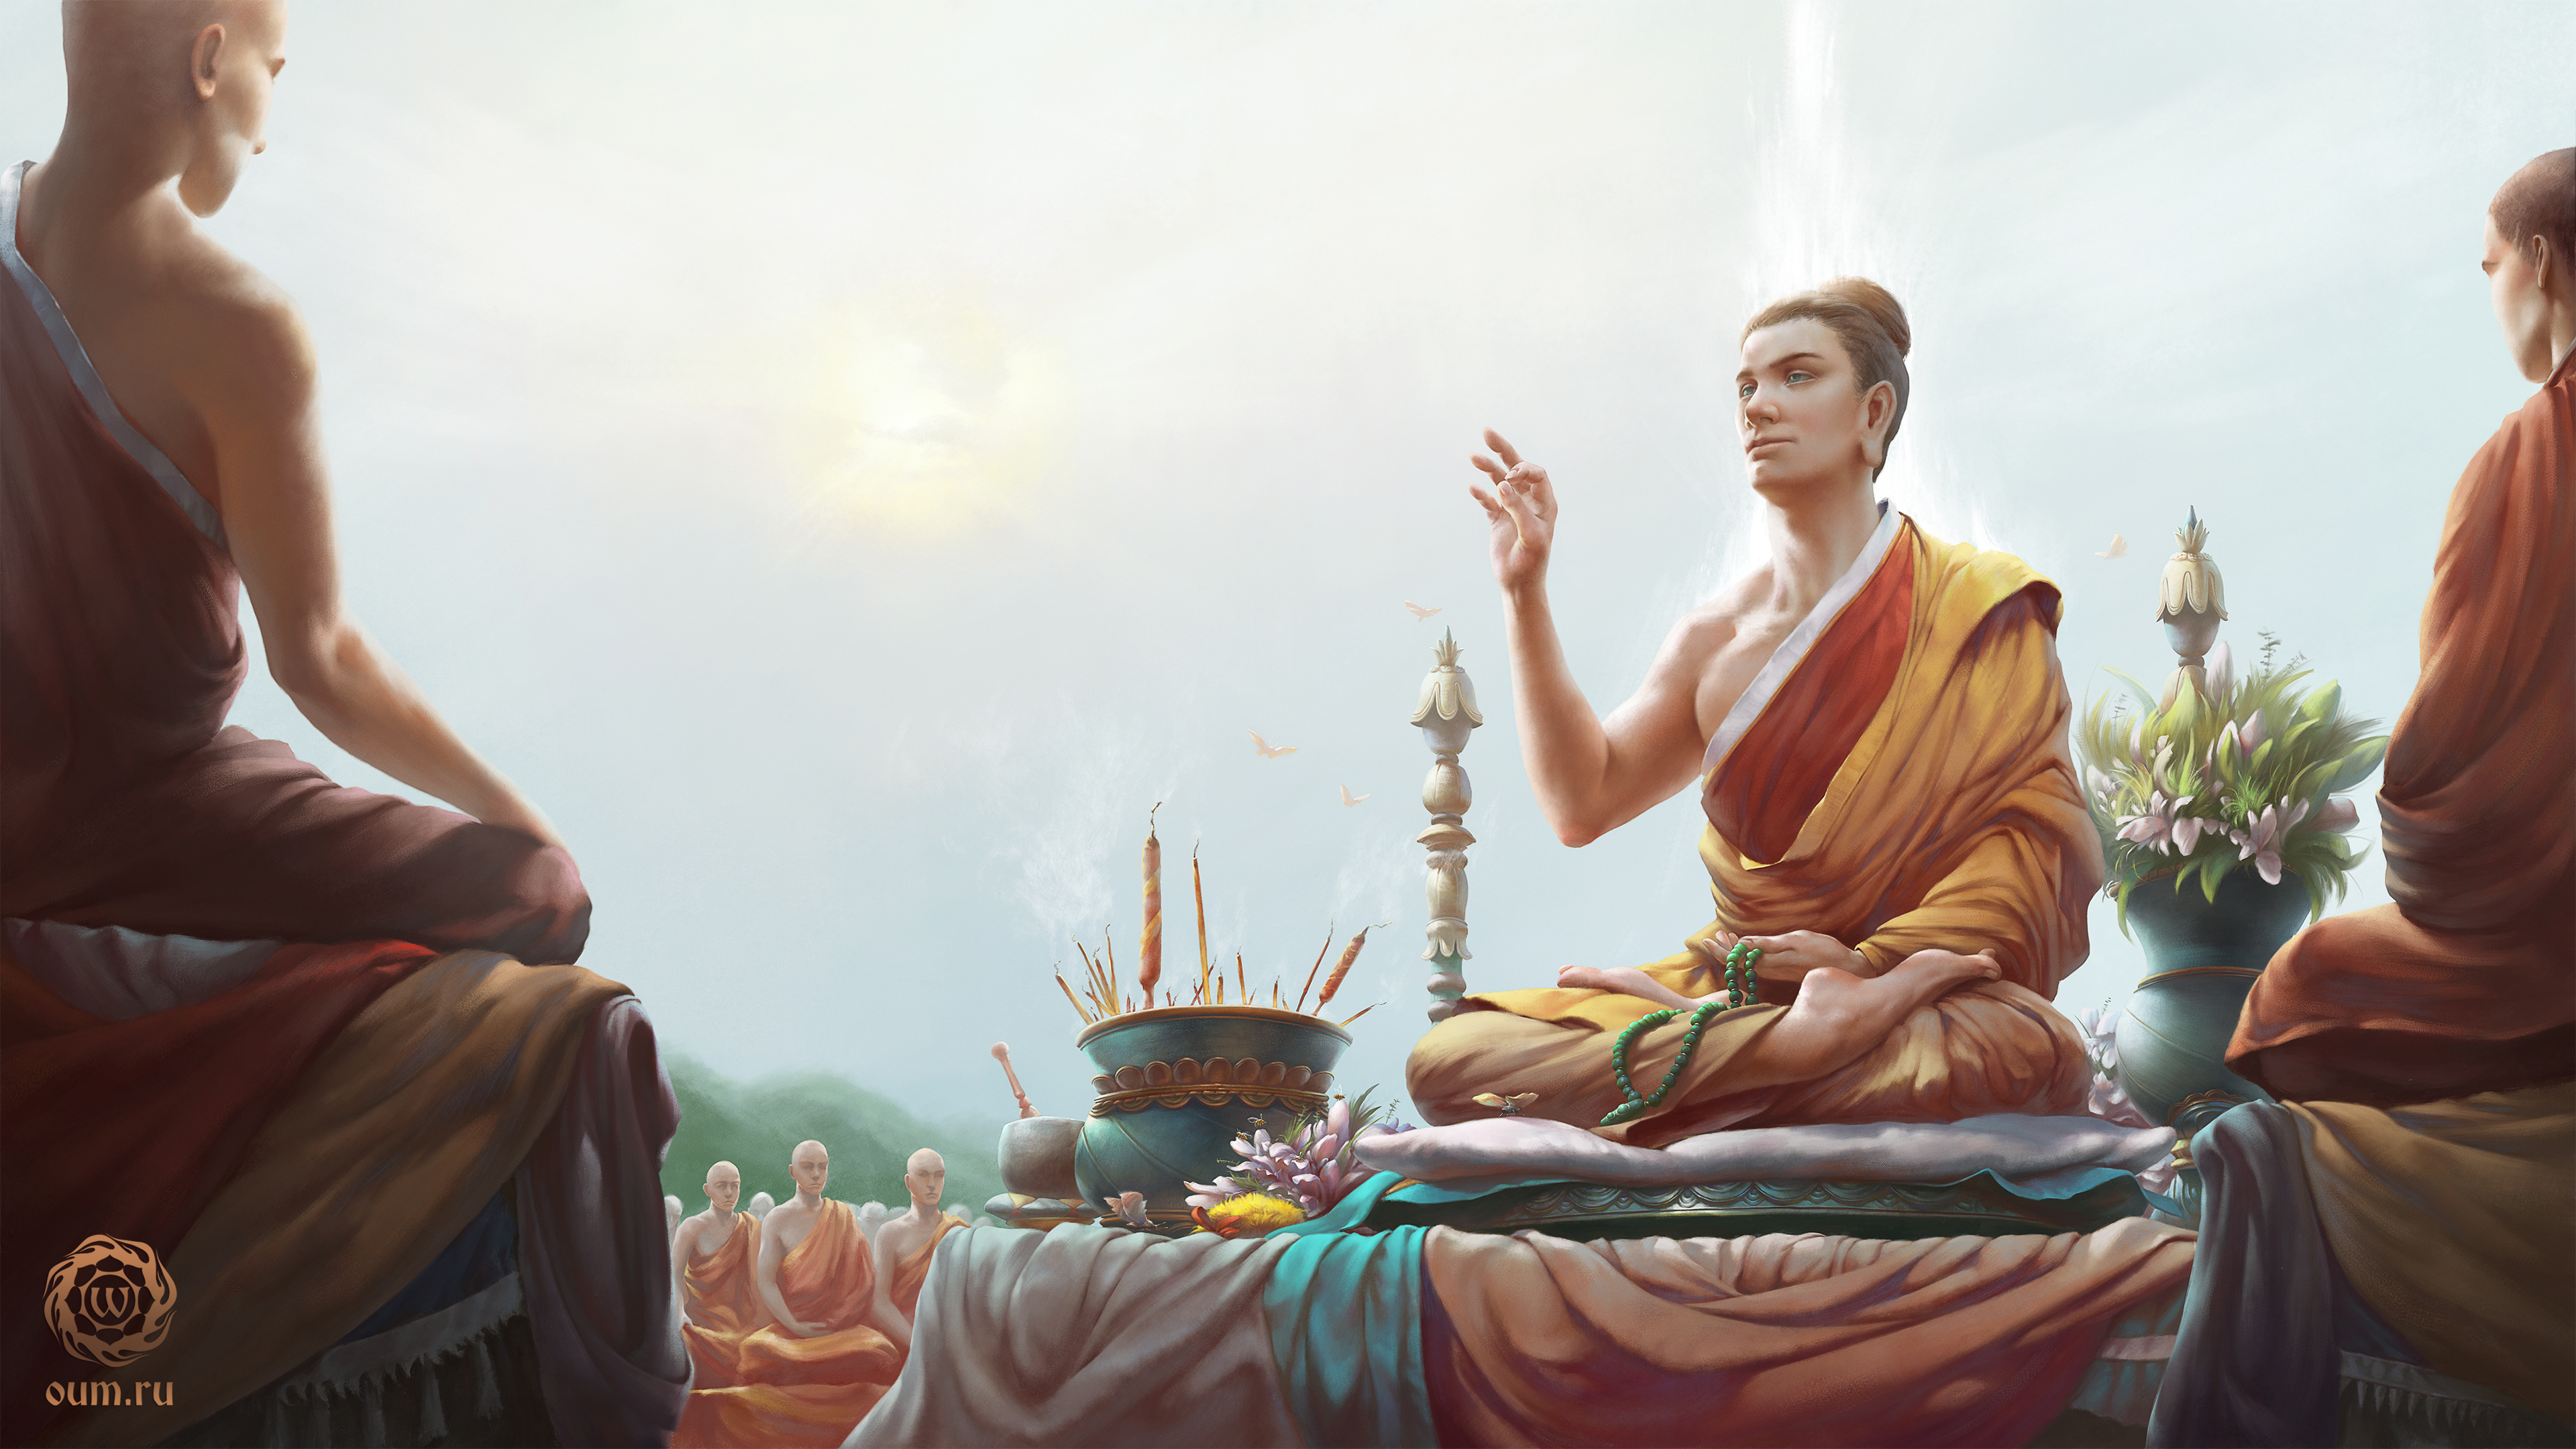 Проповедь будды. Будда Шакьямуни. Будда Шакьямуни арт. Будда дхарма Сангха. Сутра лотоса чудесной Дхармы.